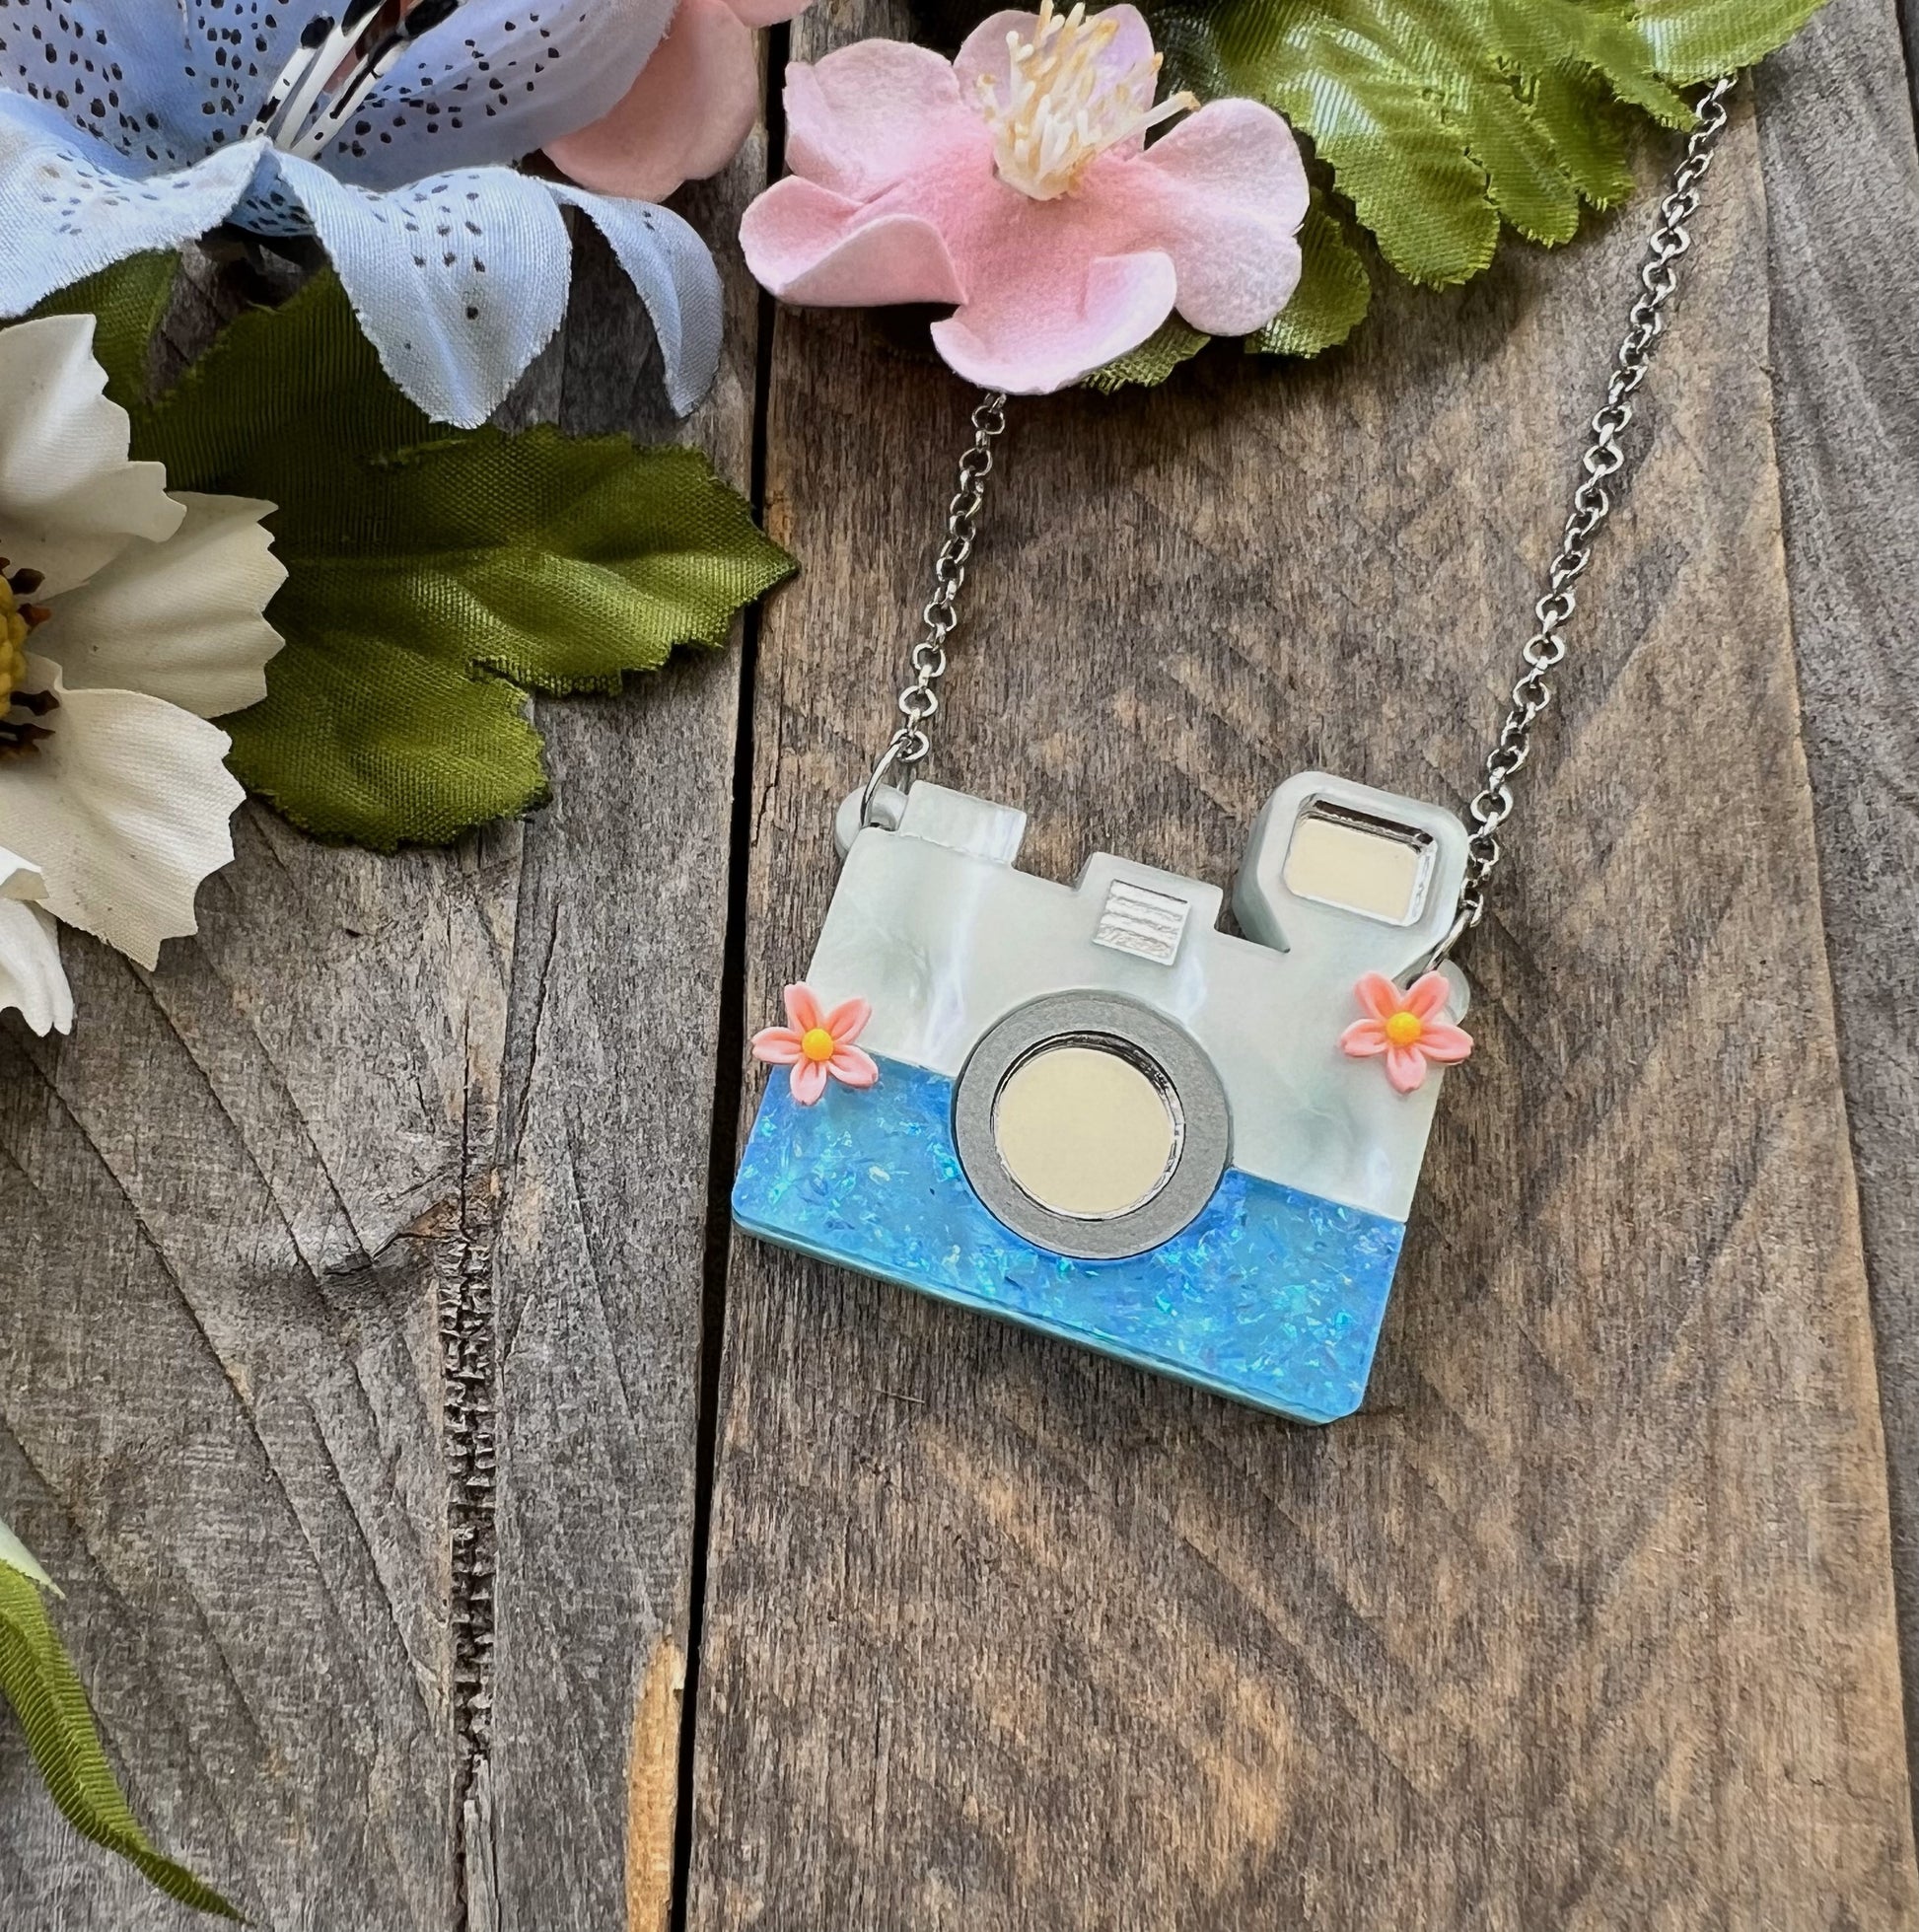 Camera necklace on wood background